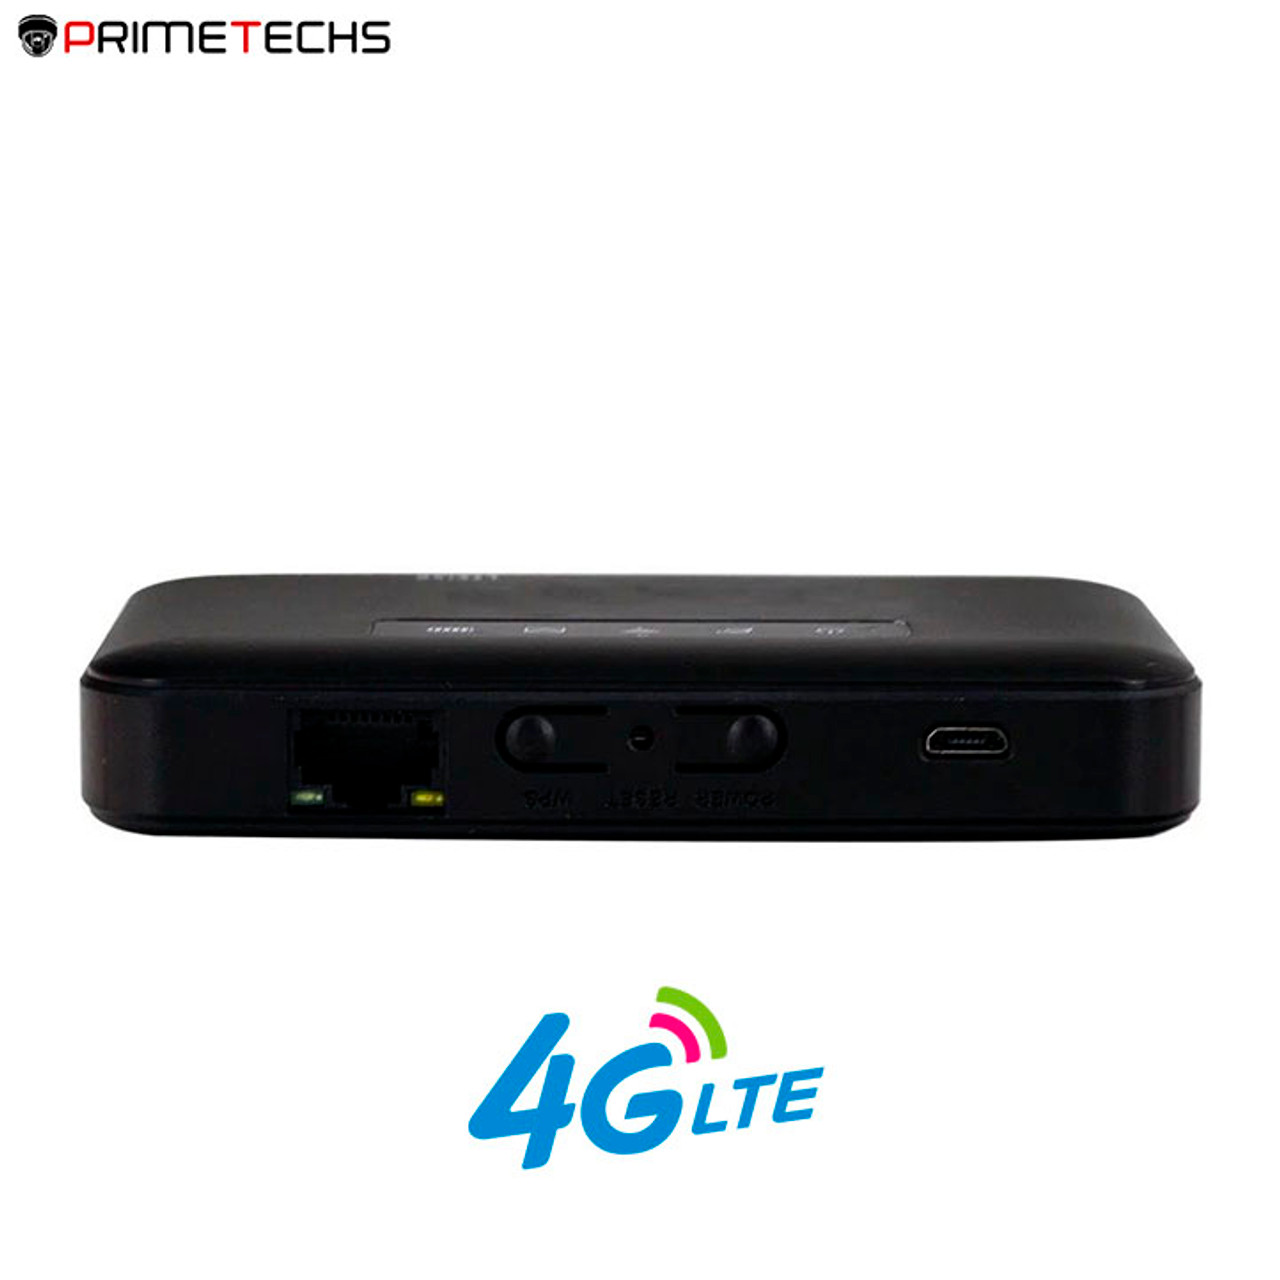 Internet Portatil PRIMETECHS, Enrutador Modem, MIFI, Internet Wi-Fi móvil,  SIM 4G LTE de cualquier compañía celular, 300 Mbps de velocidad, 1 Salida  RJ45 para conexión de PC o Switch de datos, Botón